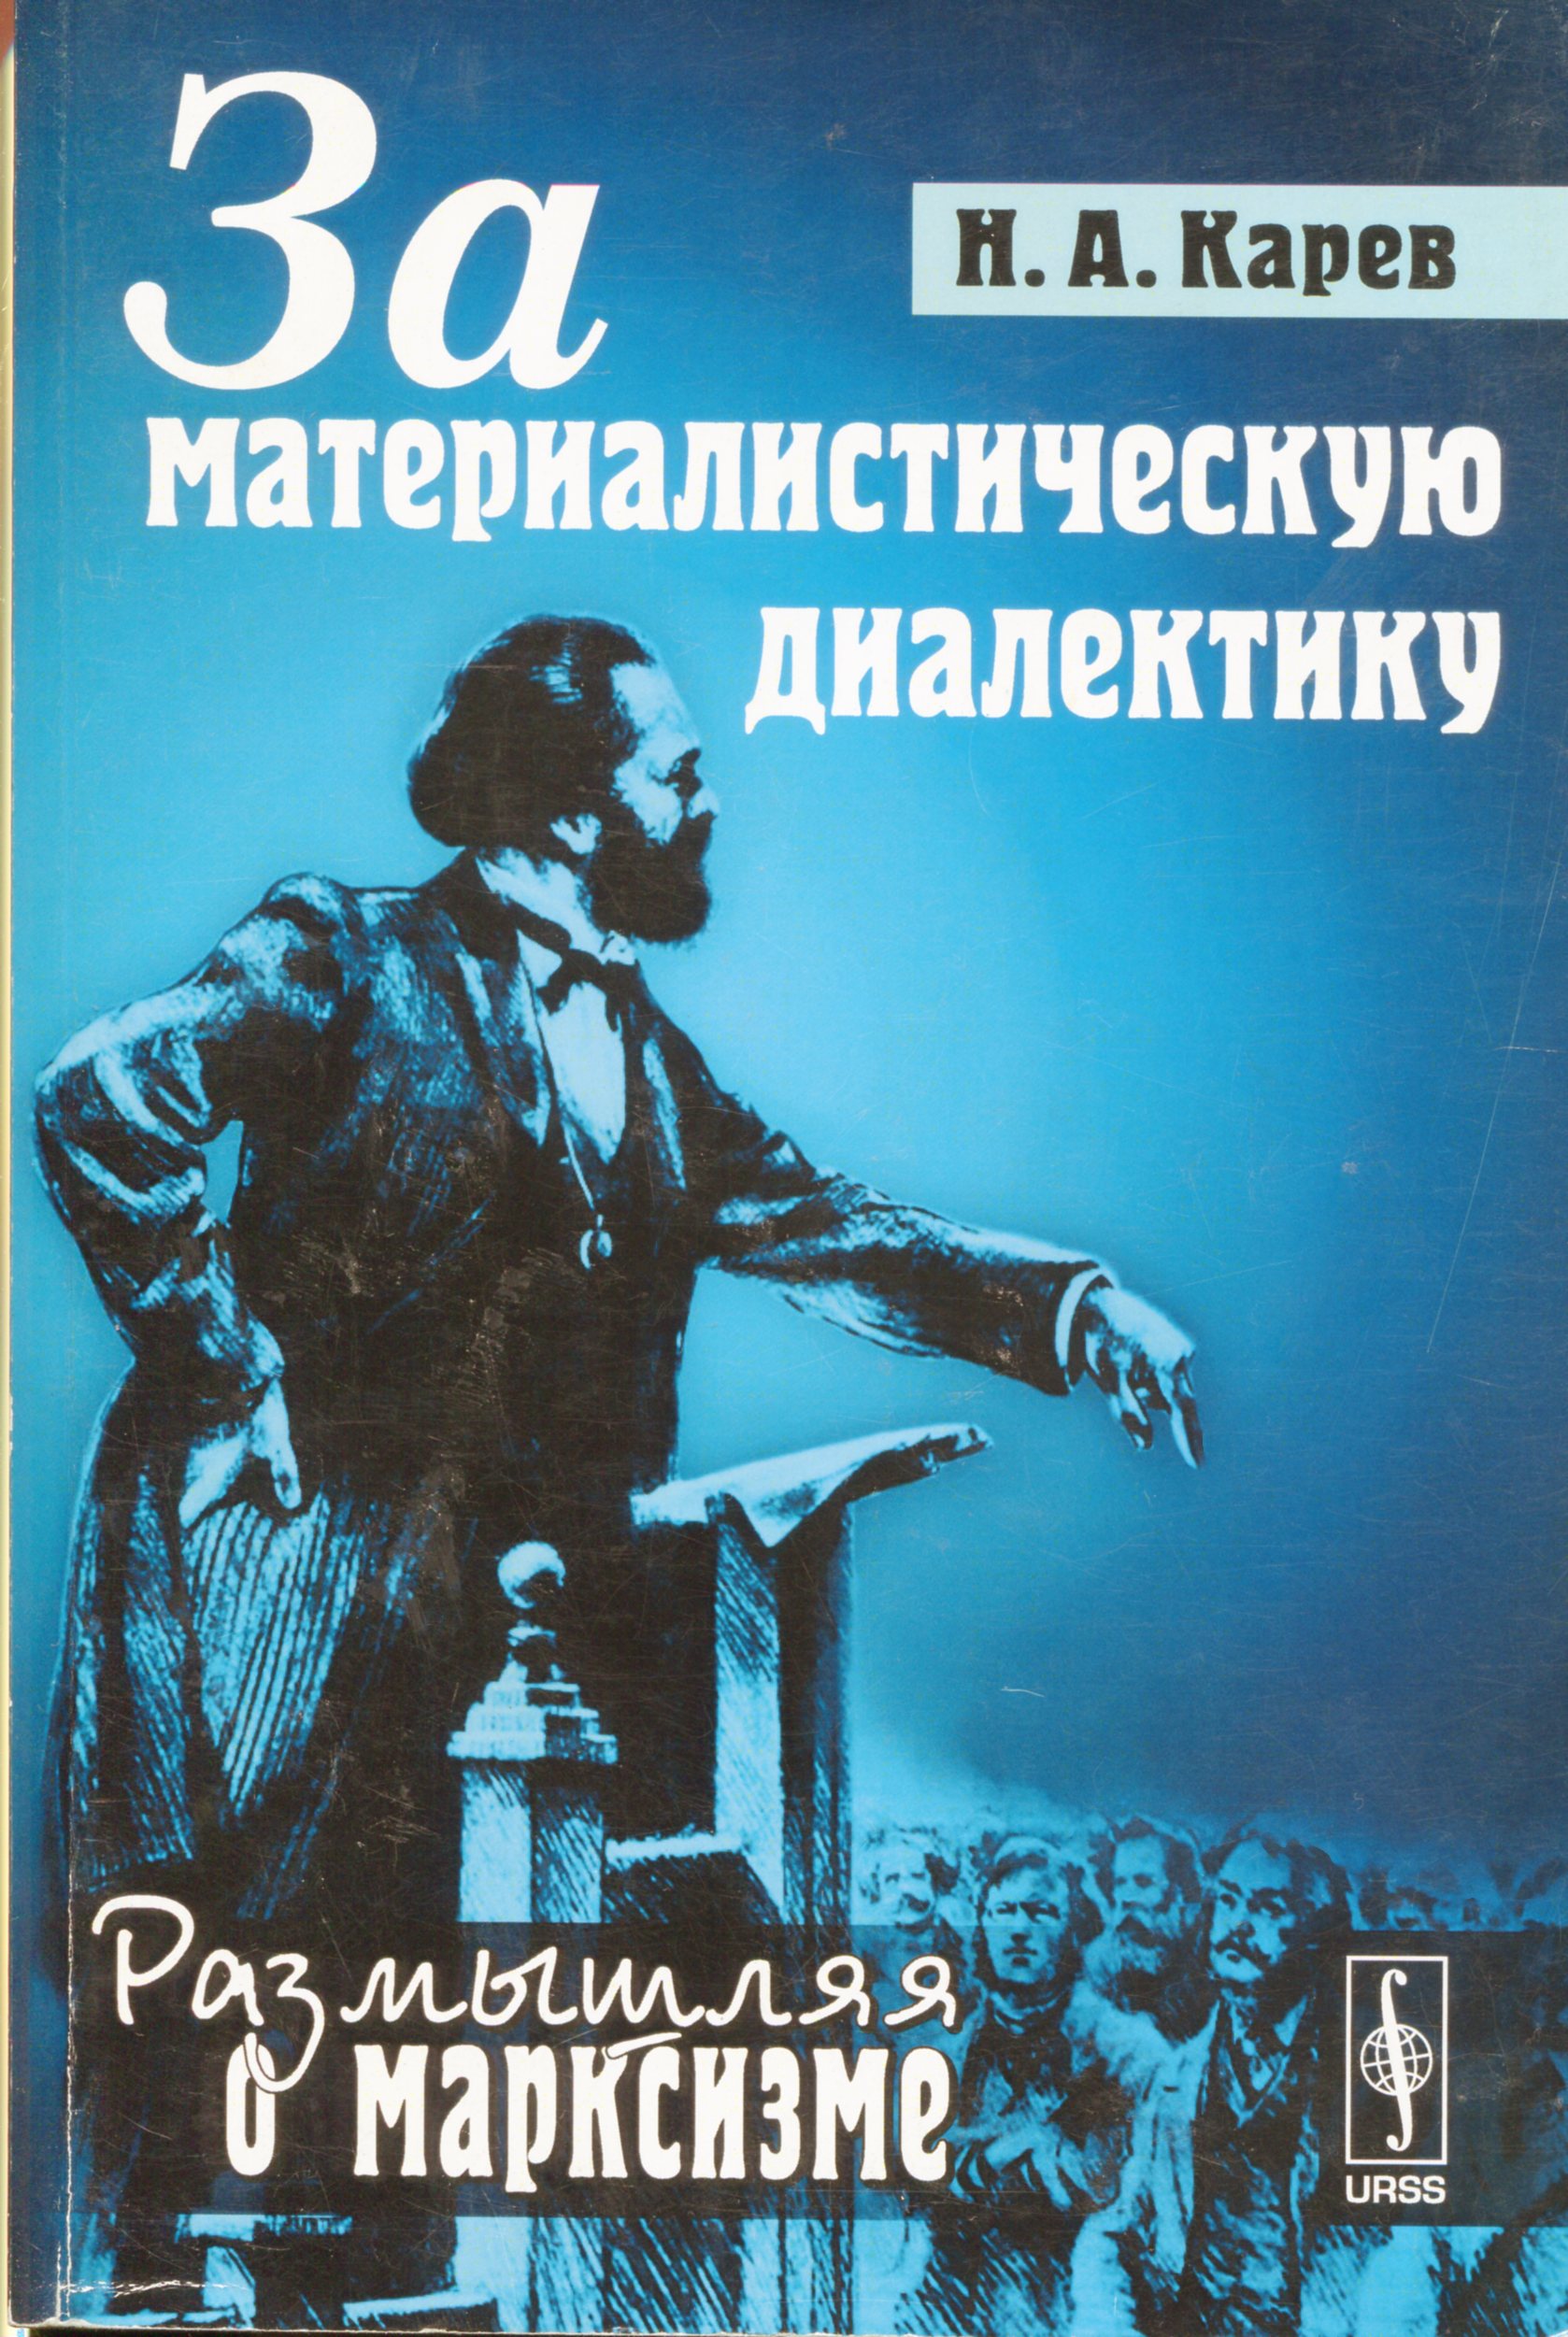 Карев Н. А. За материалистическую диалектику. М.: URSS, 2012. 408 с